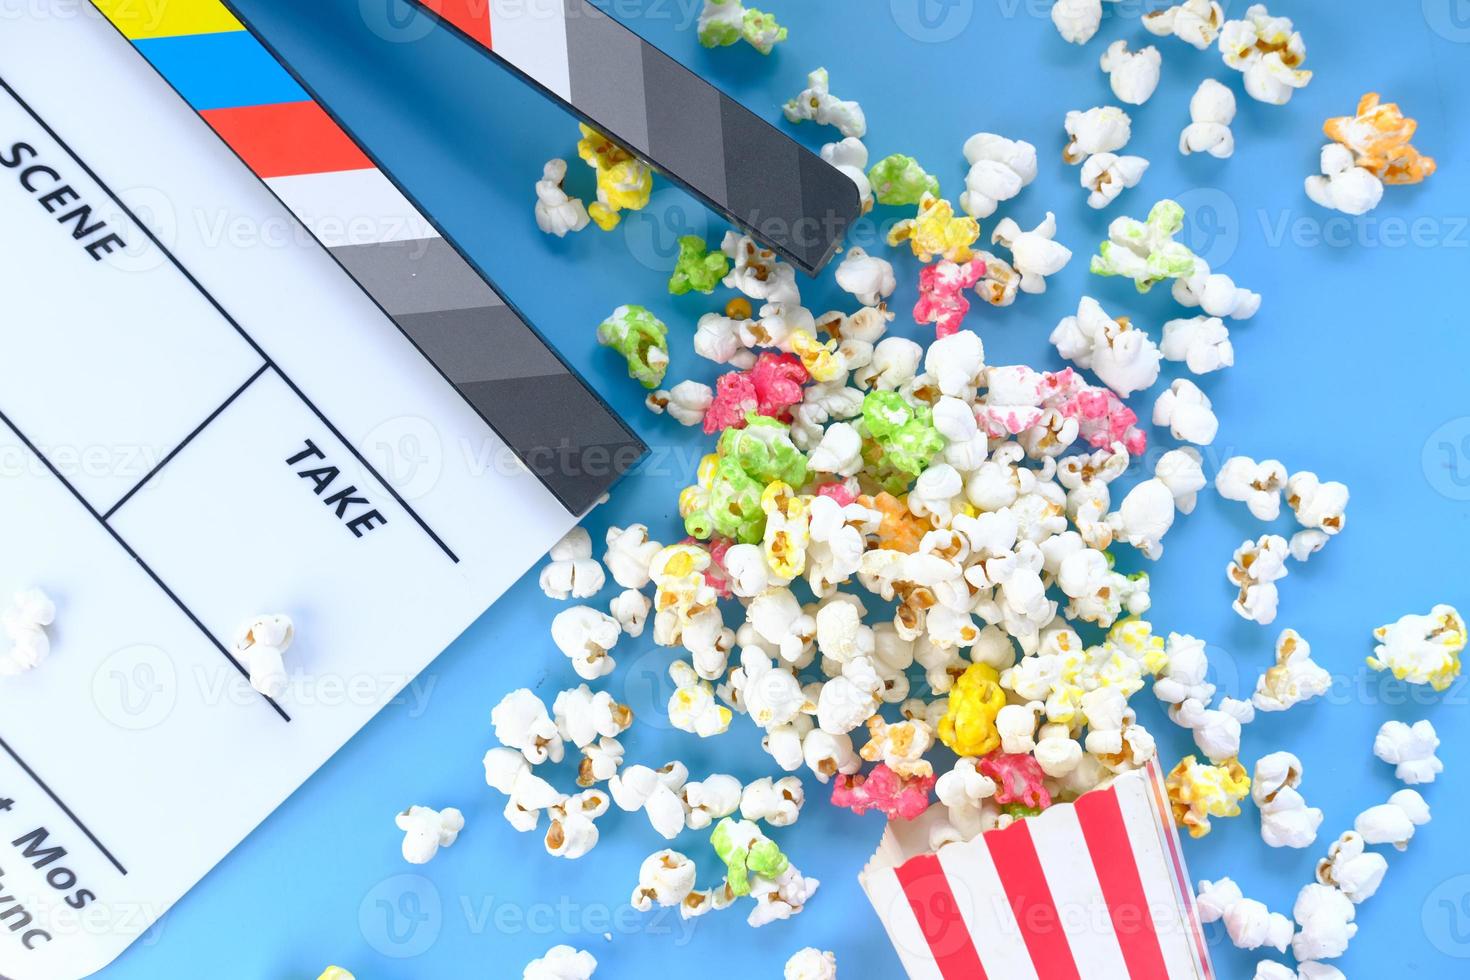 film klepel bord en popcorn op blauwe achtergrond foto